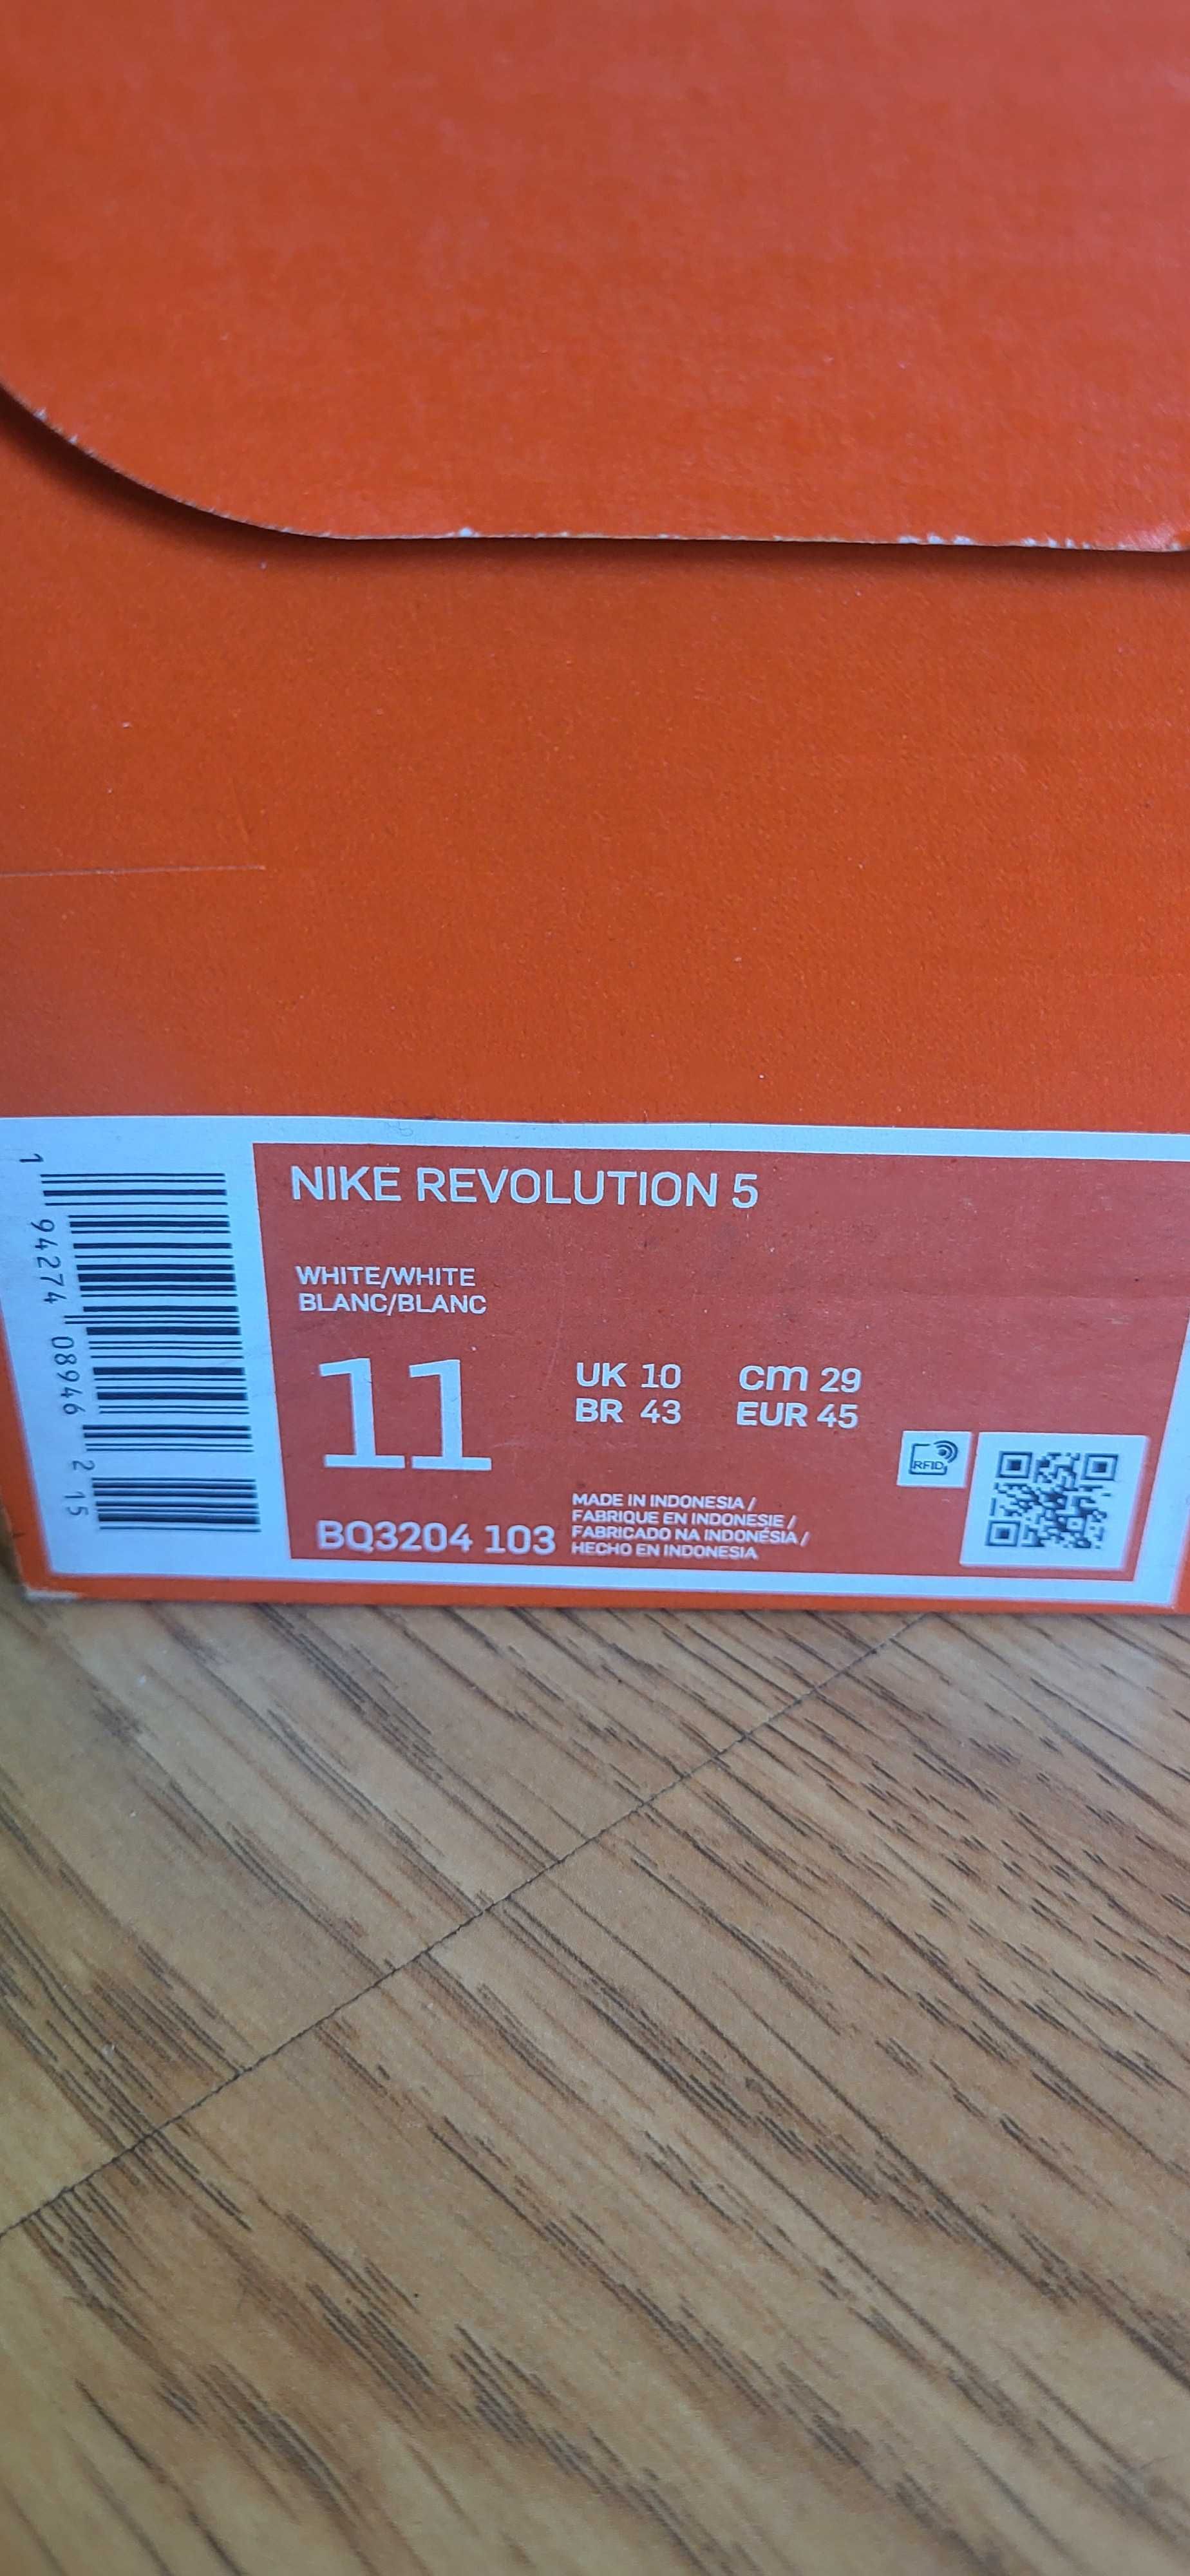 Nike REVOLUTION 5 мужские кроссовки. Оригинал!